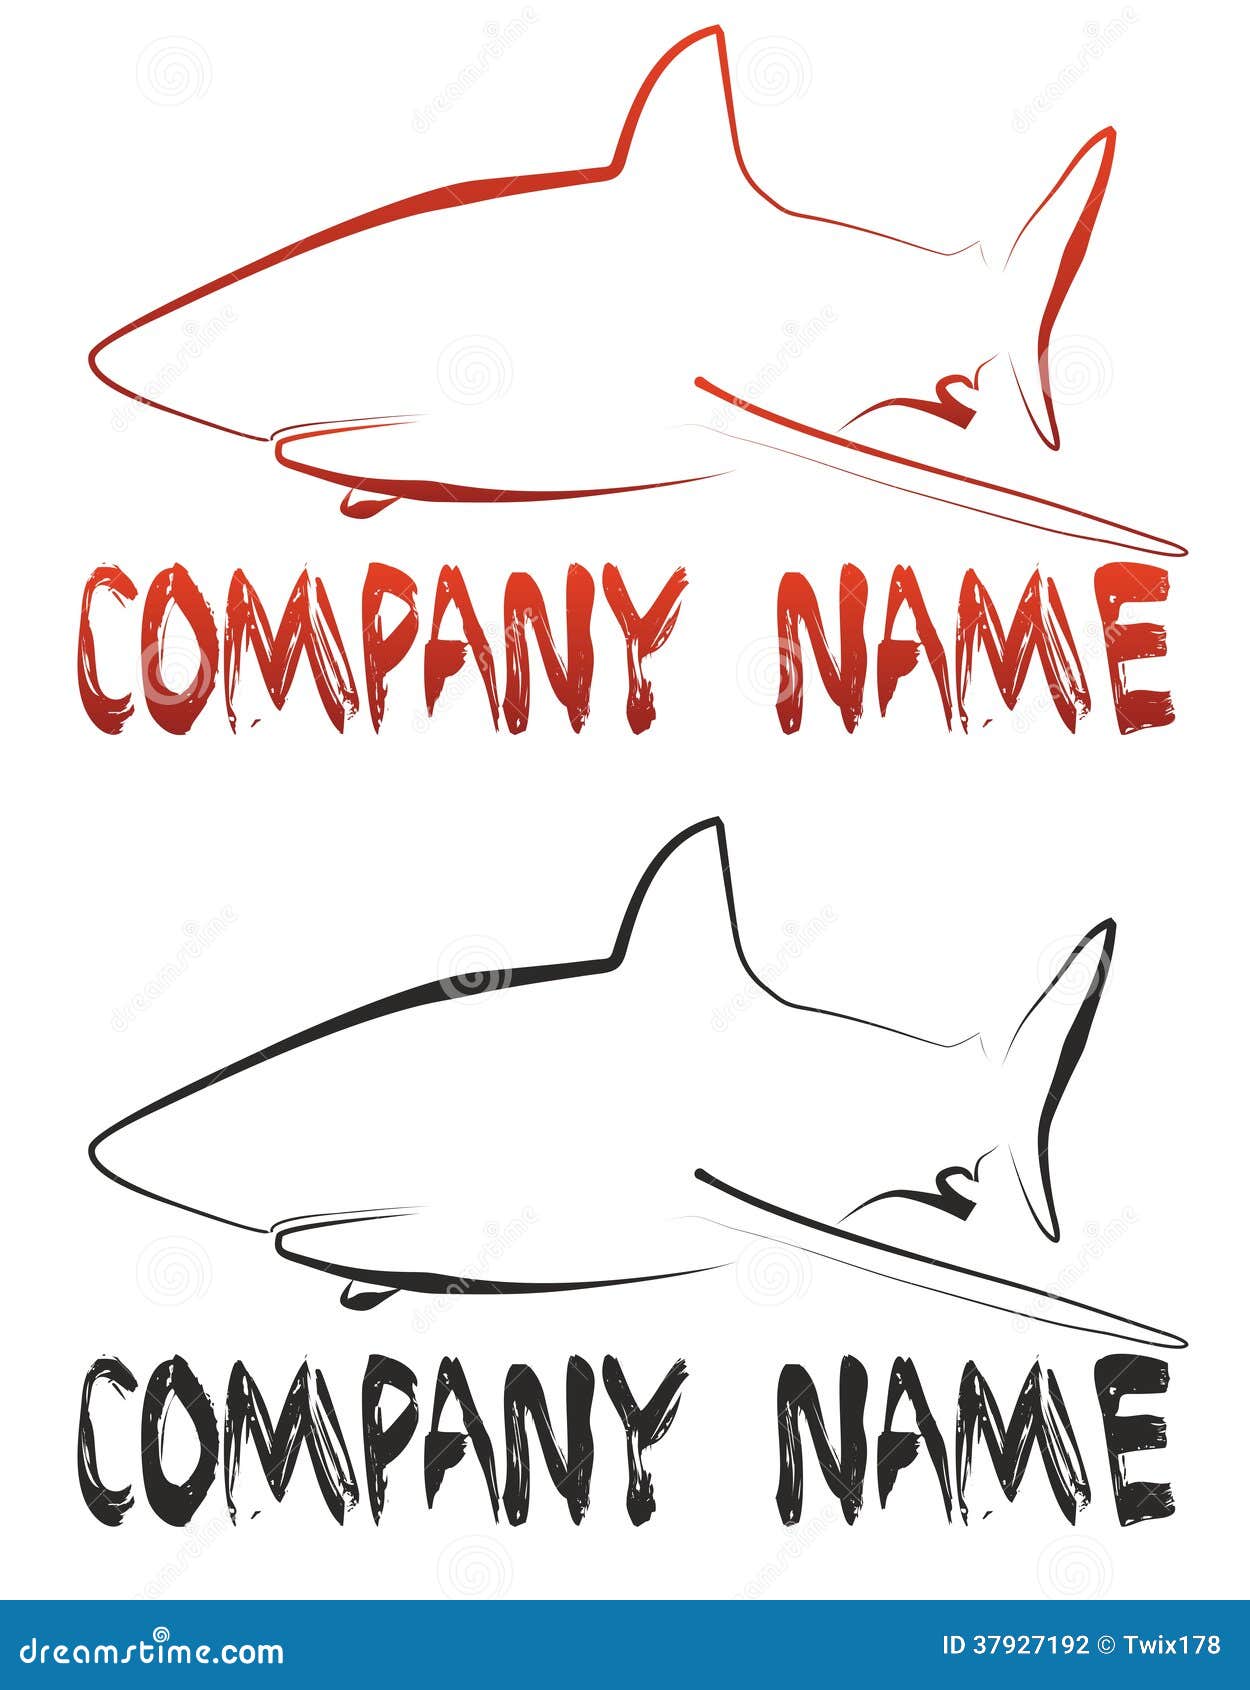 Sharks logo Stock Photos, Royalty Free Sharks logo Images